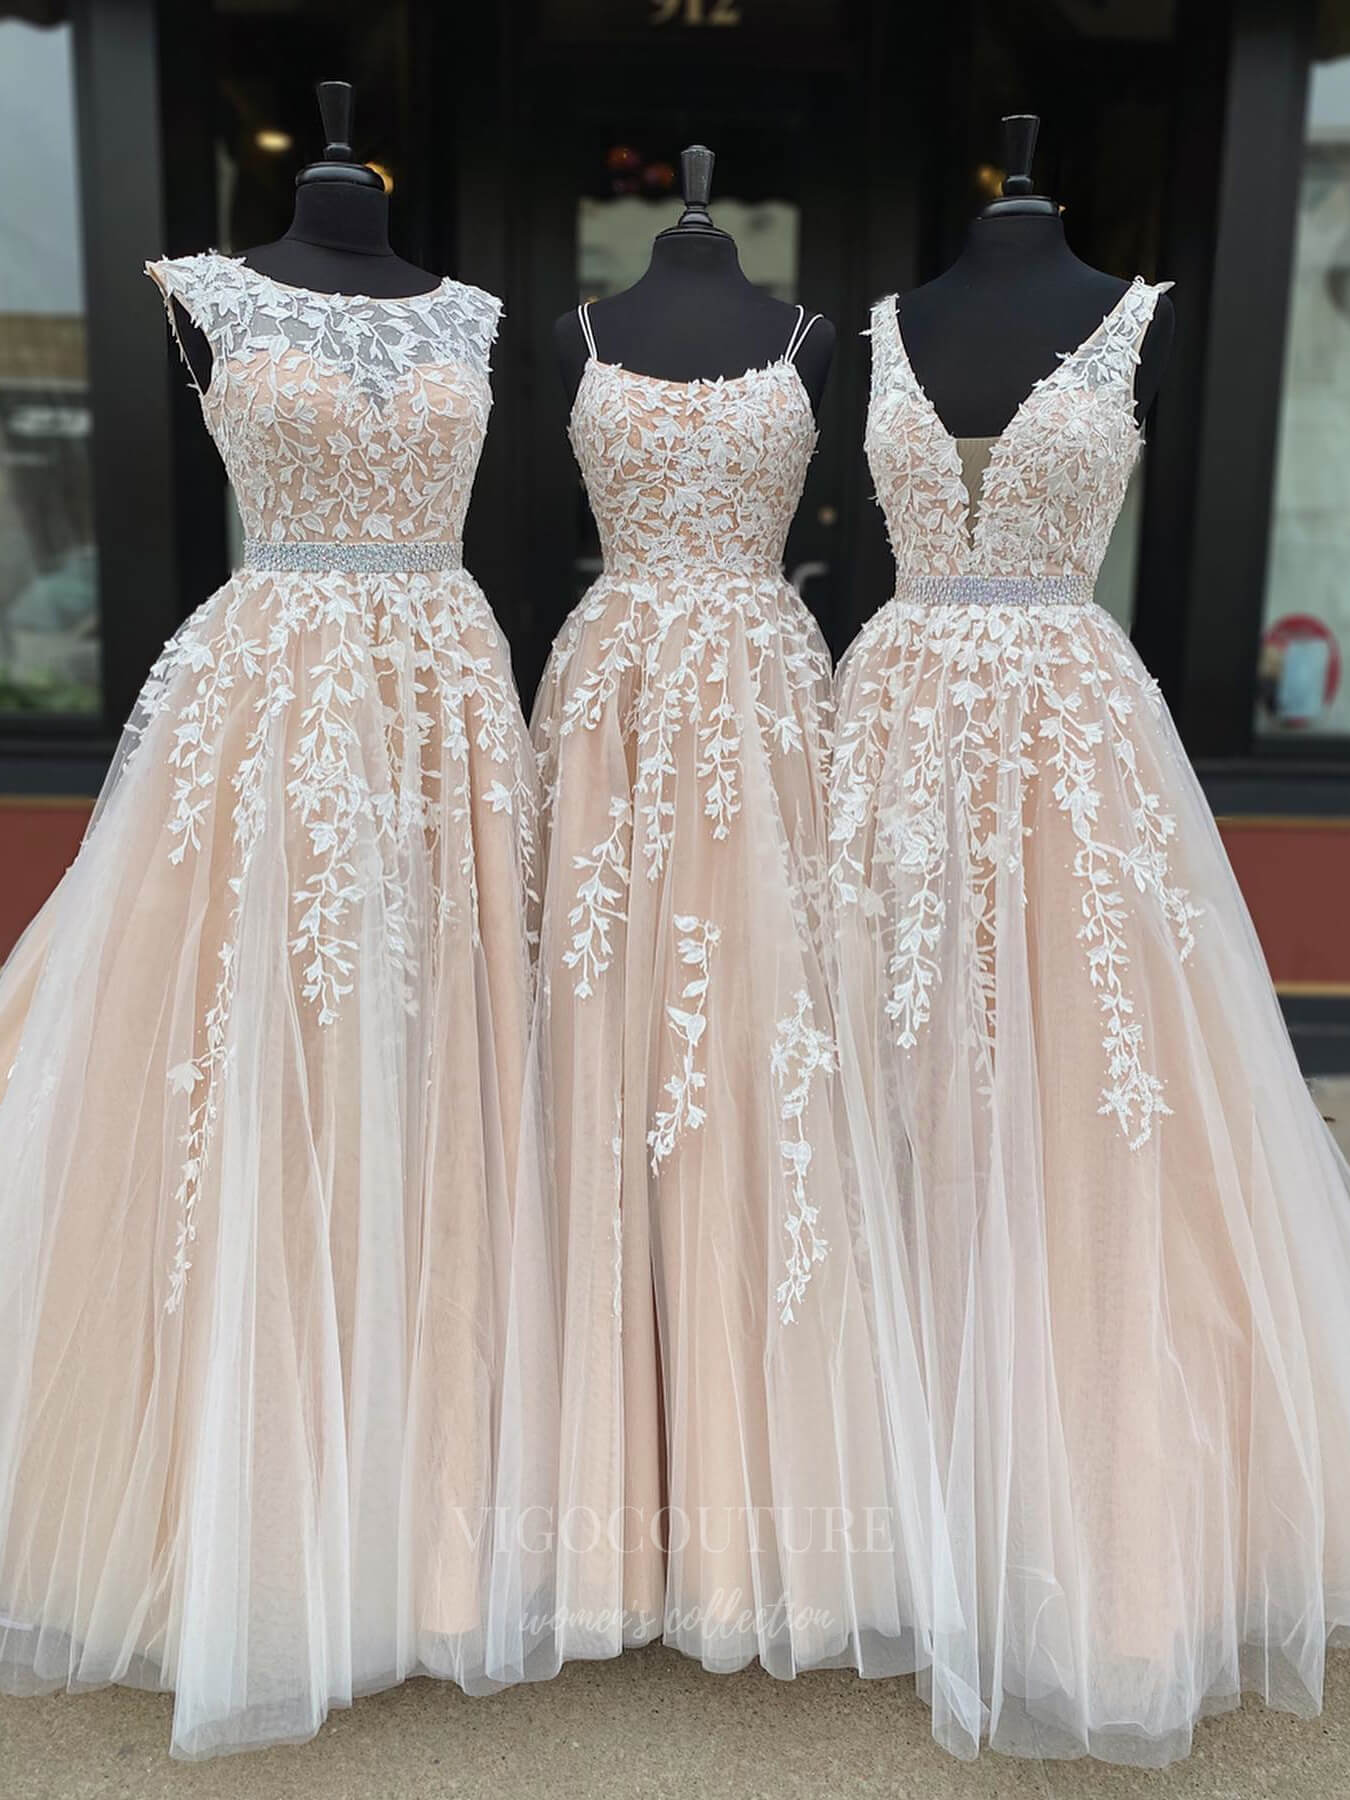 vigocouture-Khaki Lace Applique Prom Dress A-Line Evening Dresses 20928-Prom Dresses-vigocouture-Khaki-Boat Neck-US2